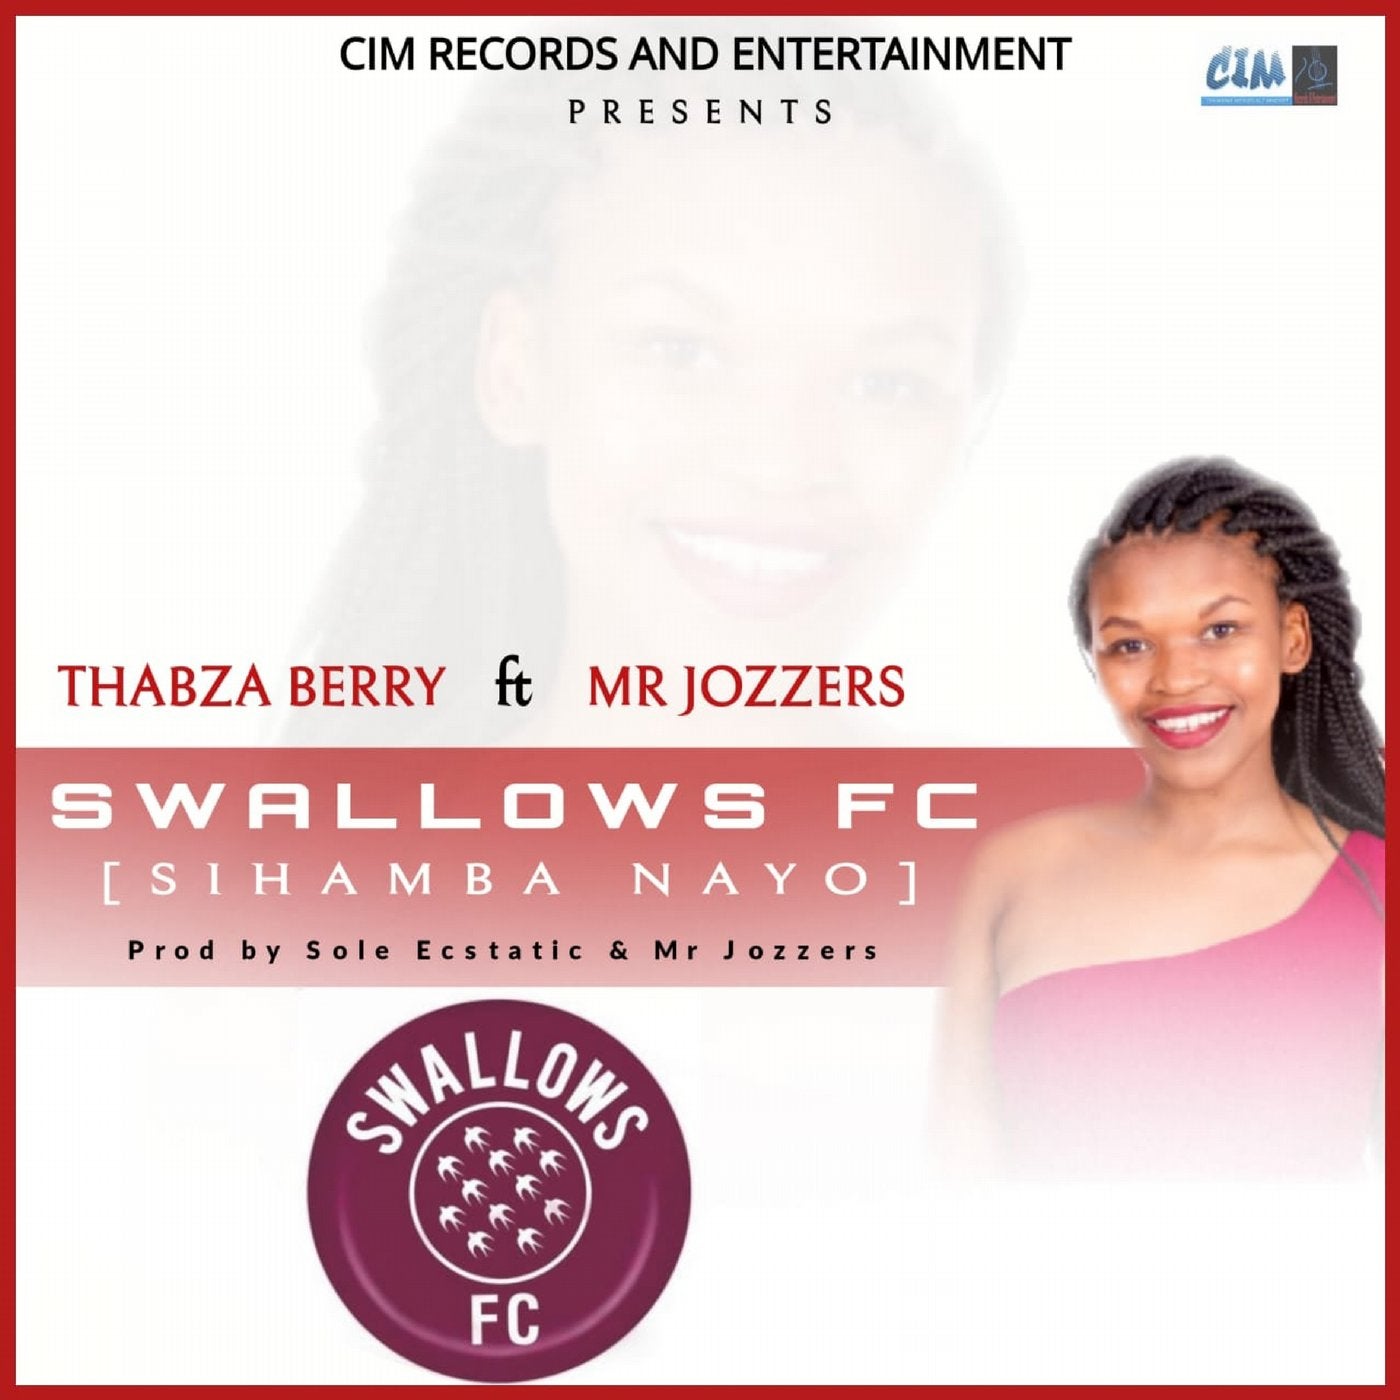 Swallows FC (Sihamba Nayo)